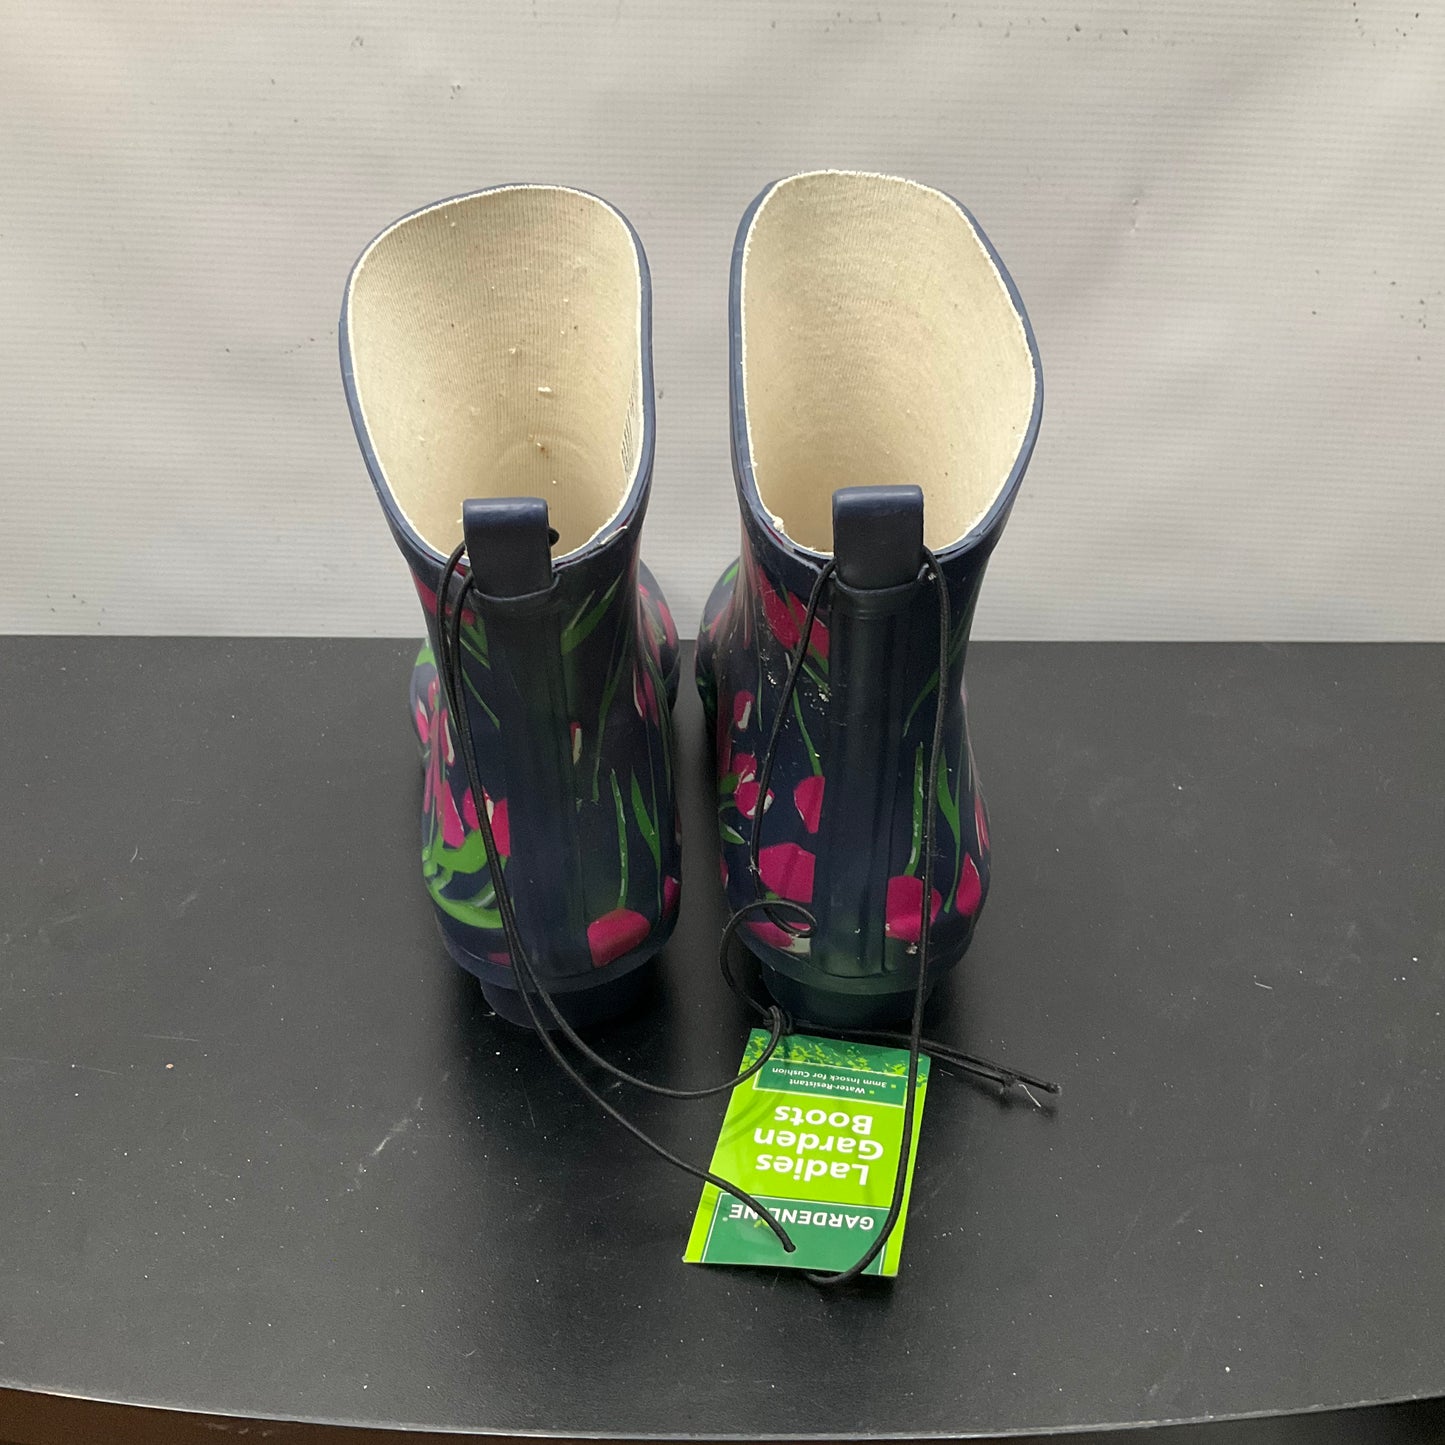 Boots Rain By Gardenline  Size: 9